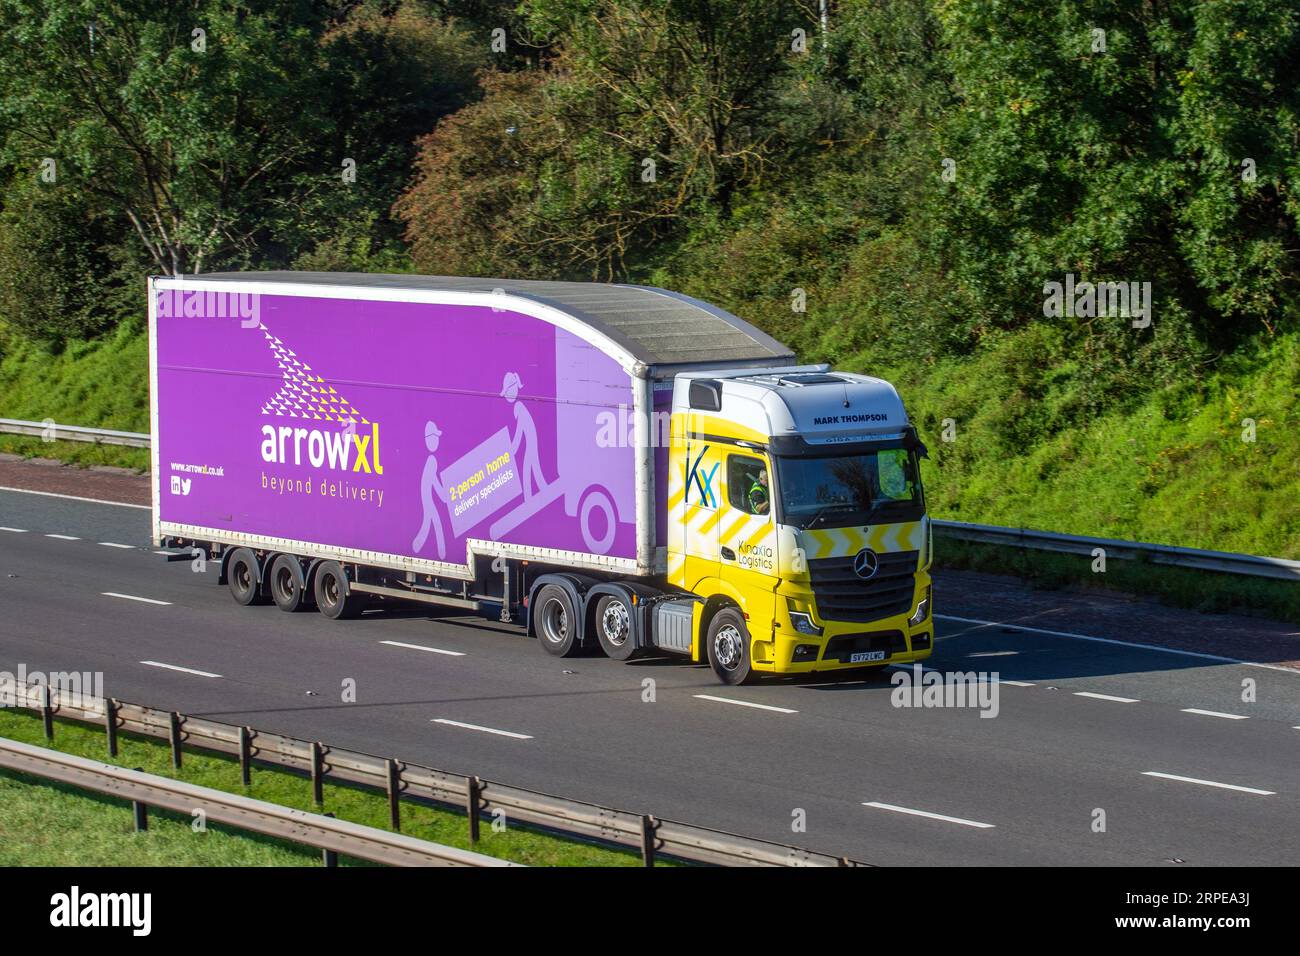 ArrowXL, Arrow XL und Kinaxia Logistics. Mark Thompson Shipping Freight, Mercedes-Benz Heavy Transportlage, zweiköpfiger Heimlieferer ArrowXL de Trucks auf der M6 in Greater Manchester, Großbritannien Stockfoto